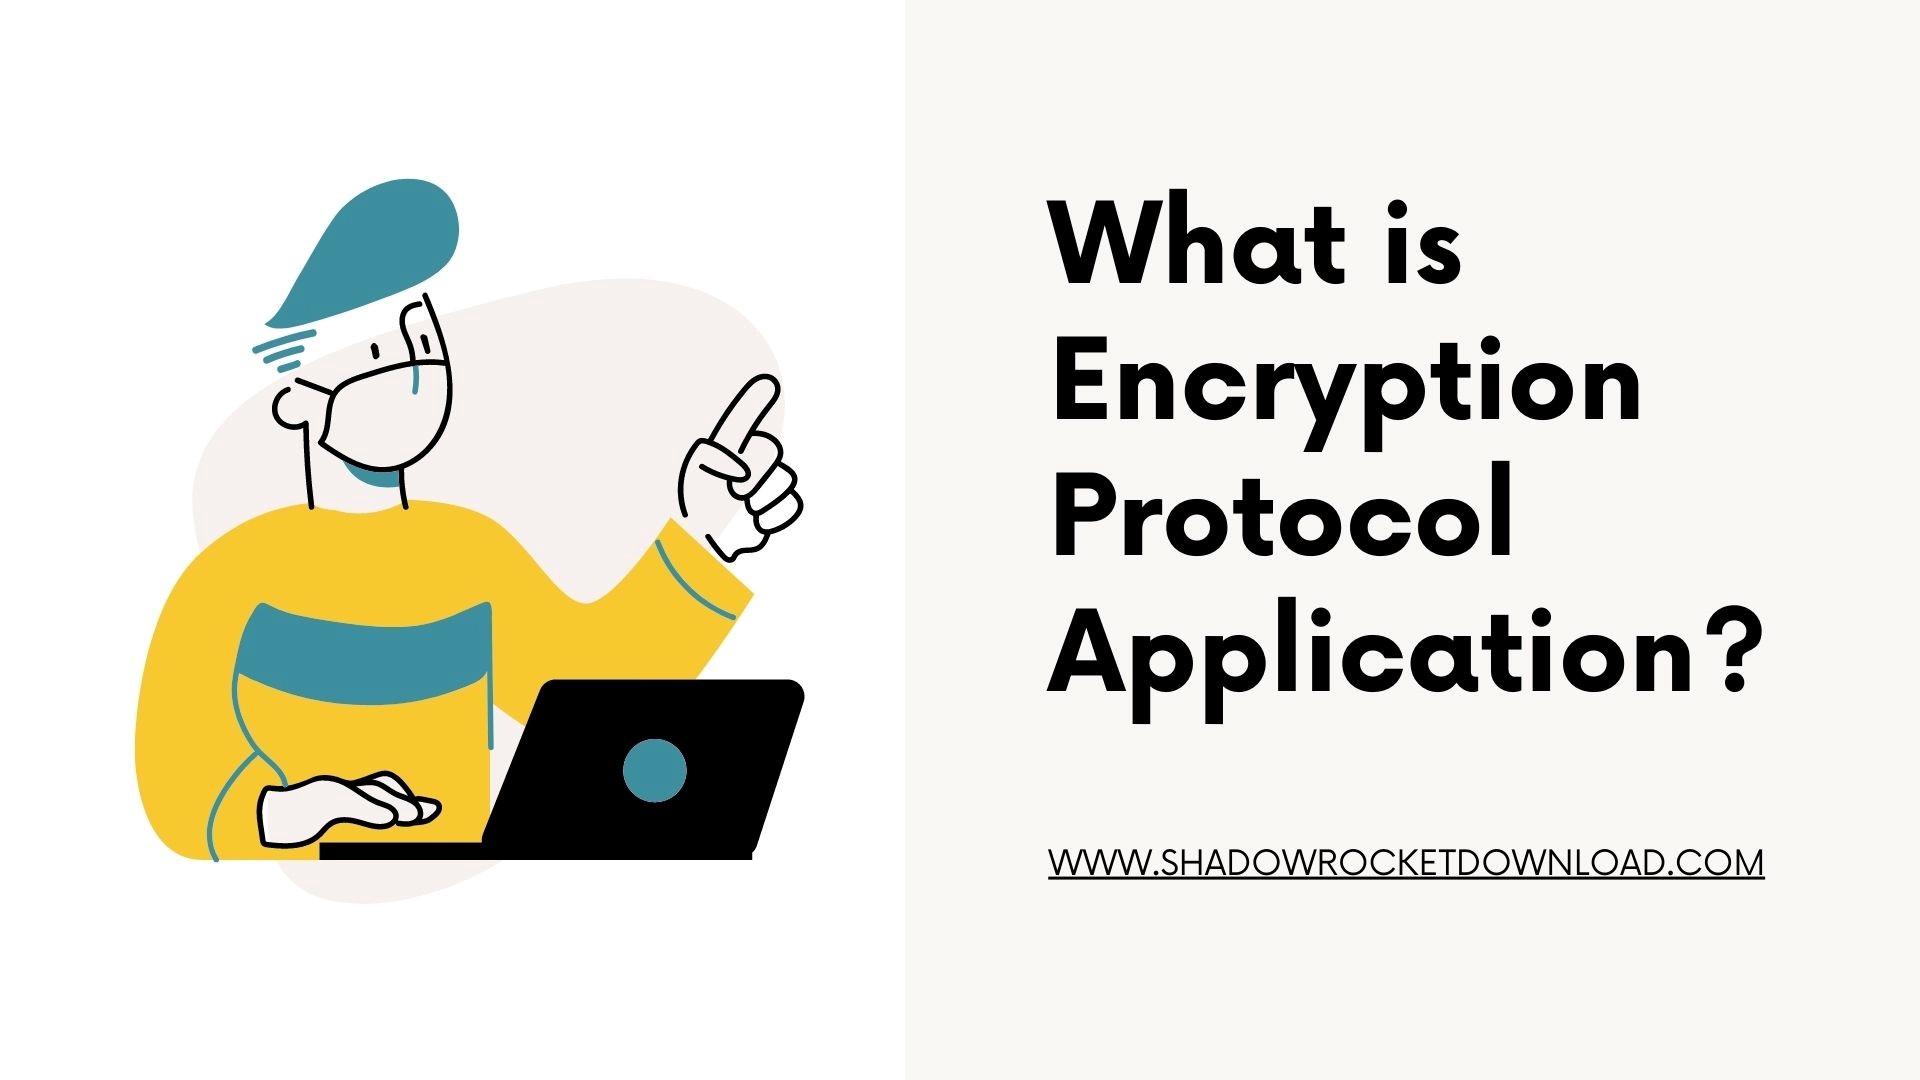 Encryption Protocol Application